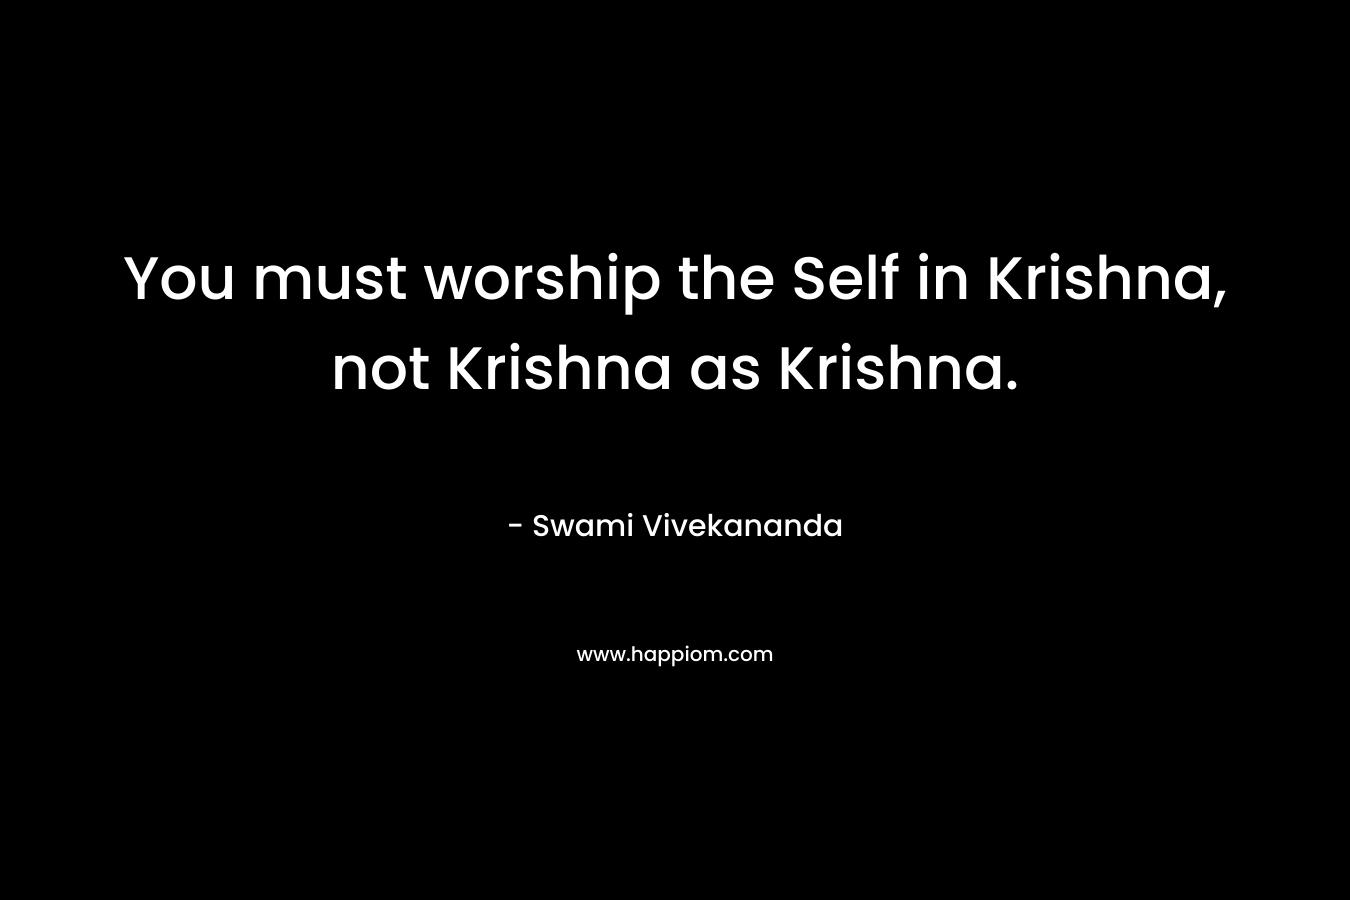 You must worship the Self in Krishna, not Krishna as Krishna.